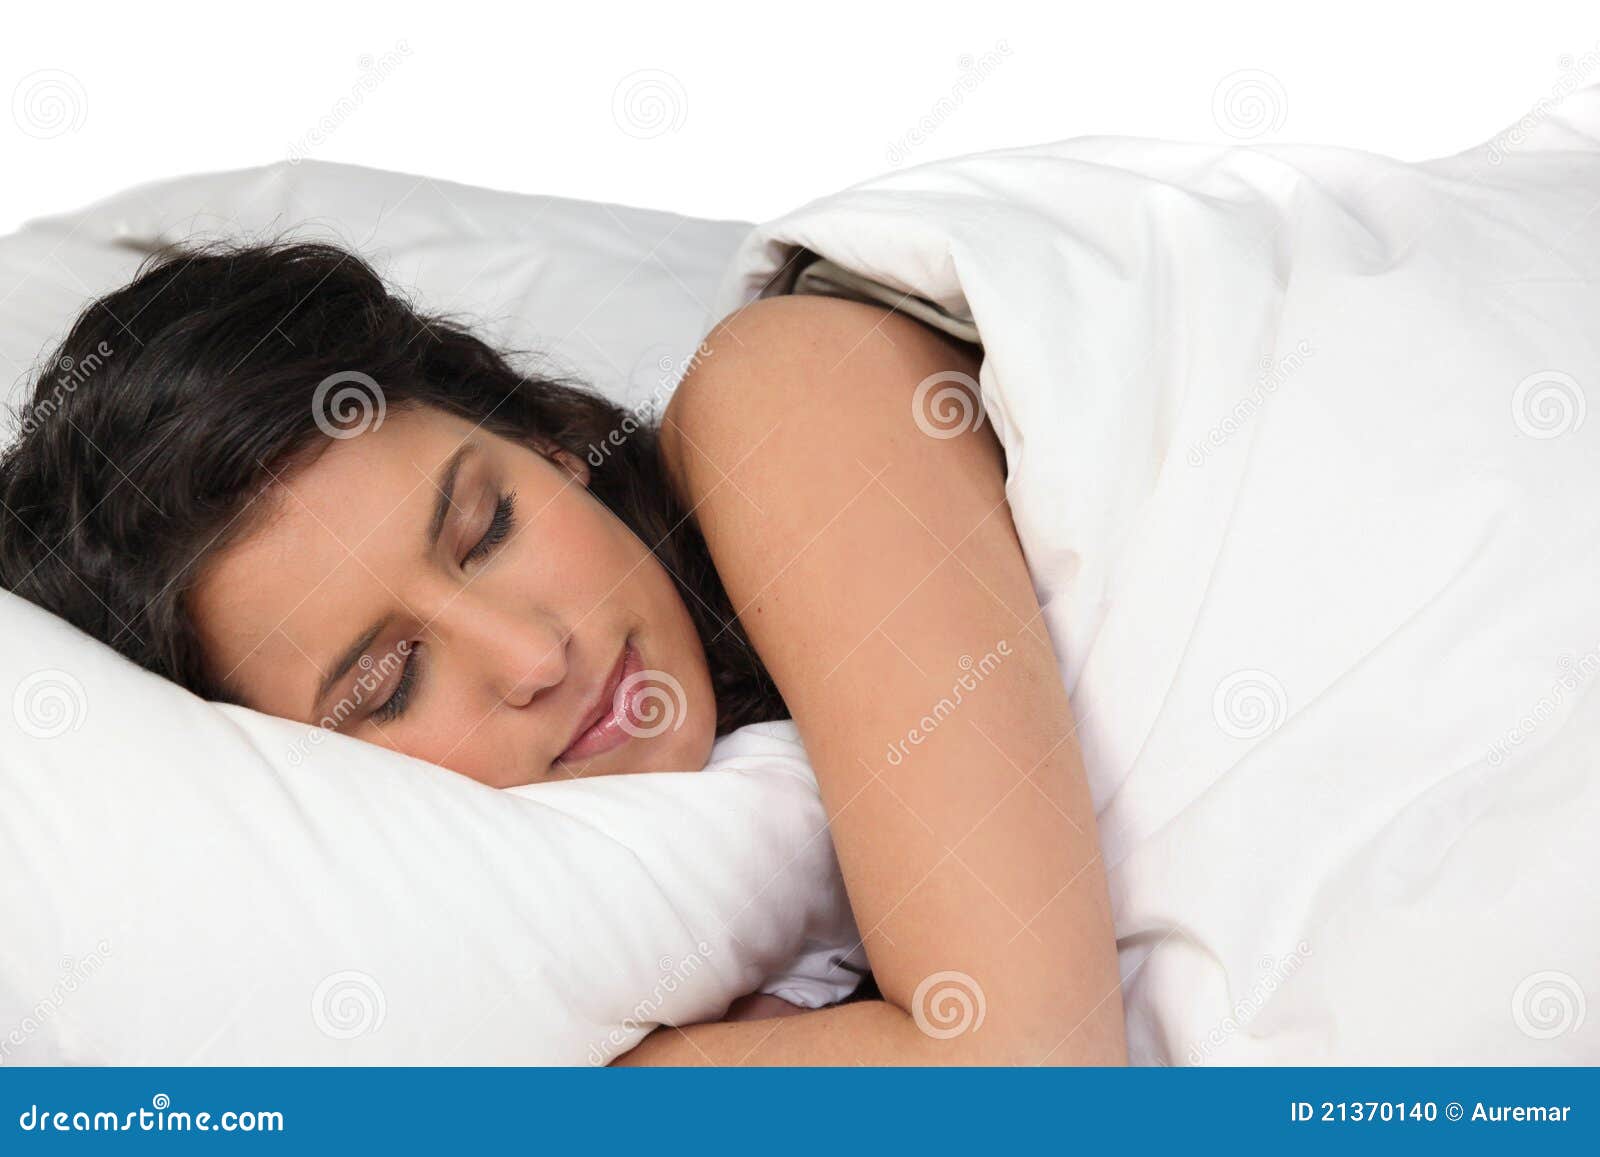 woman sleeping peacefully